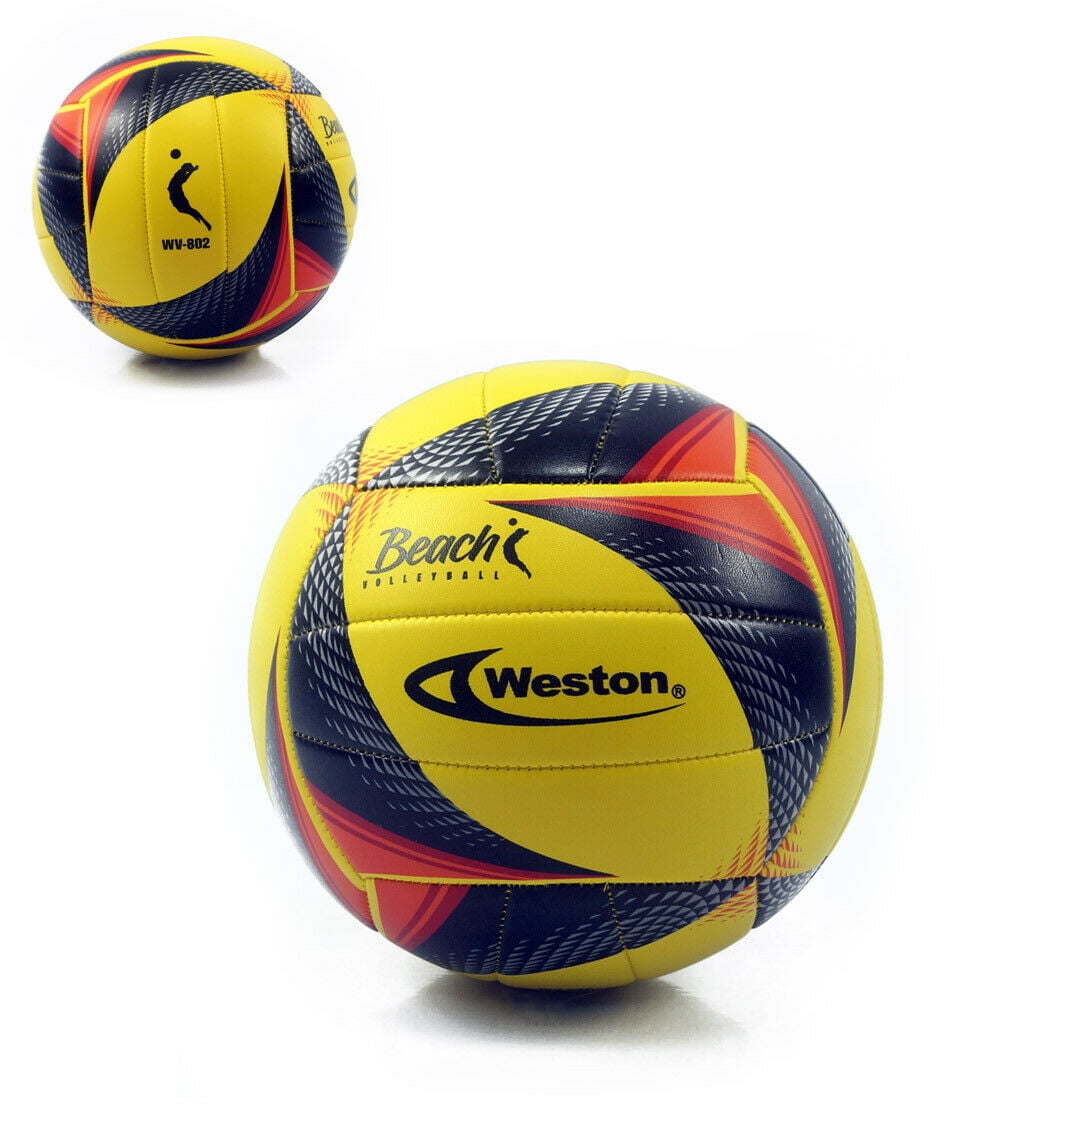 Weston Premium Recreational Beach Volleyball Official Size 